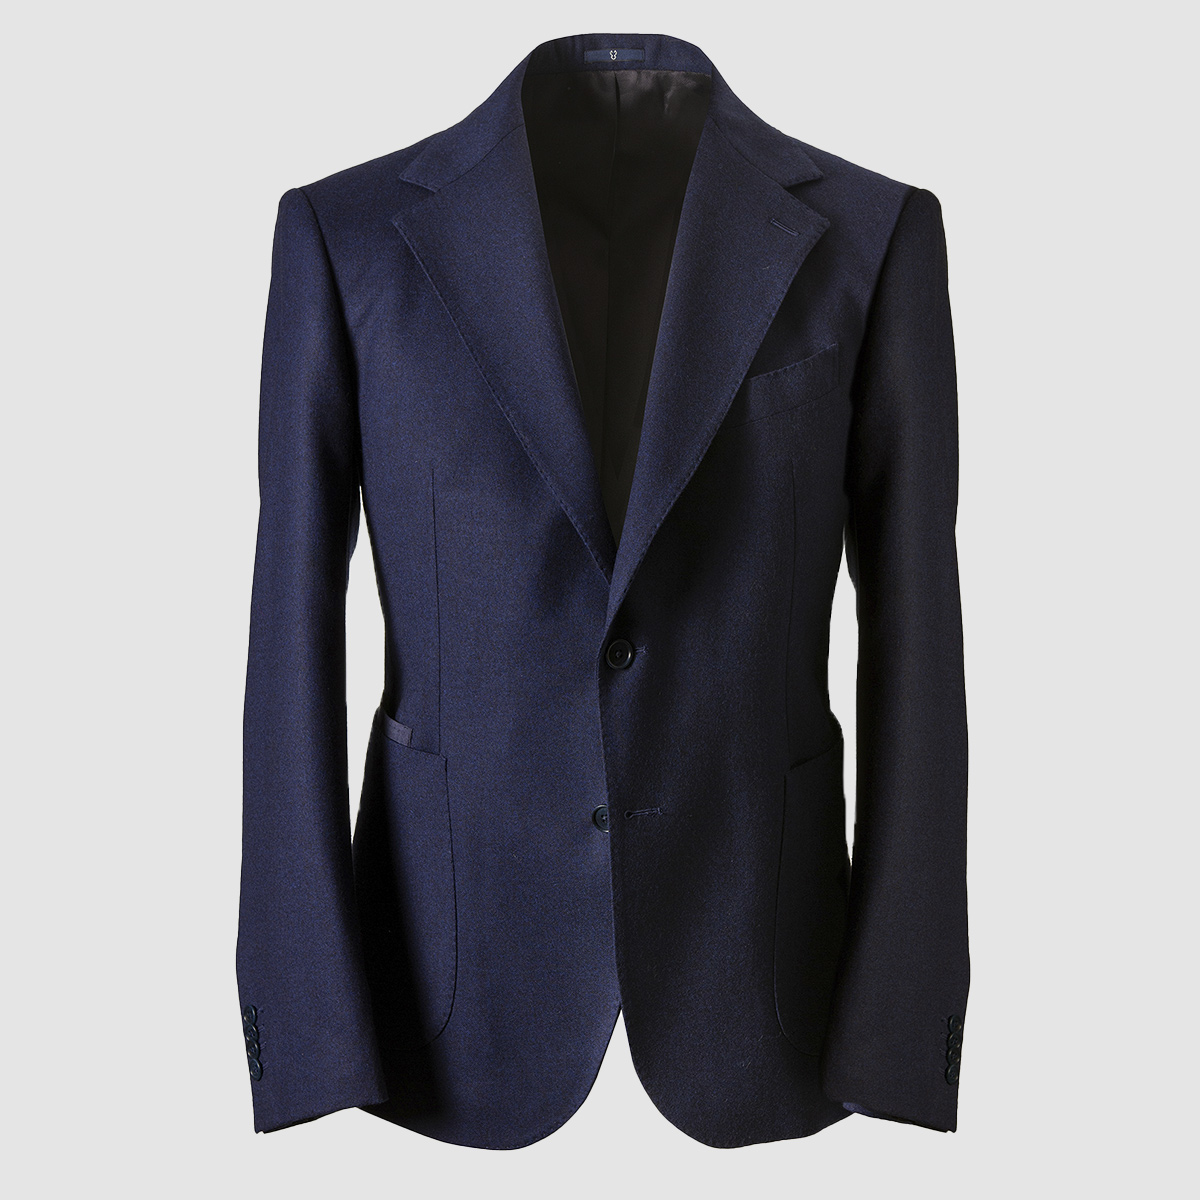 Blue 100% Wool Blazer “Vesuvio ” model Melillo 1970 on sale 2022 2